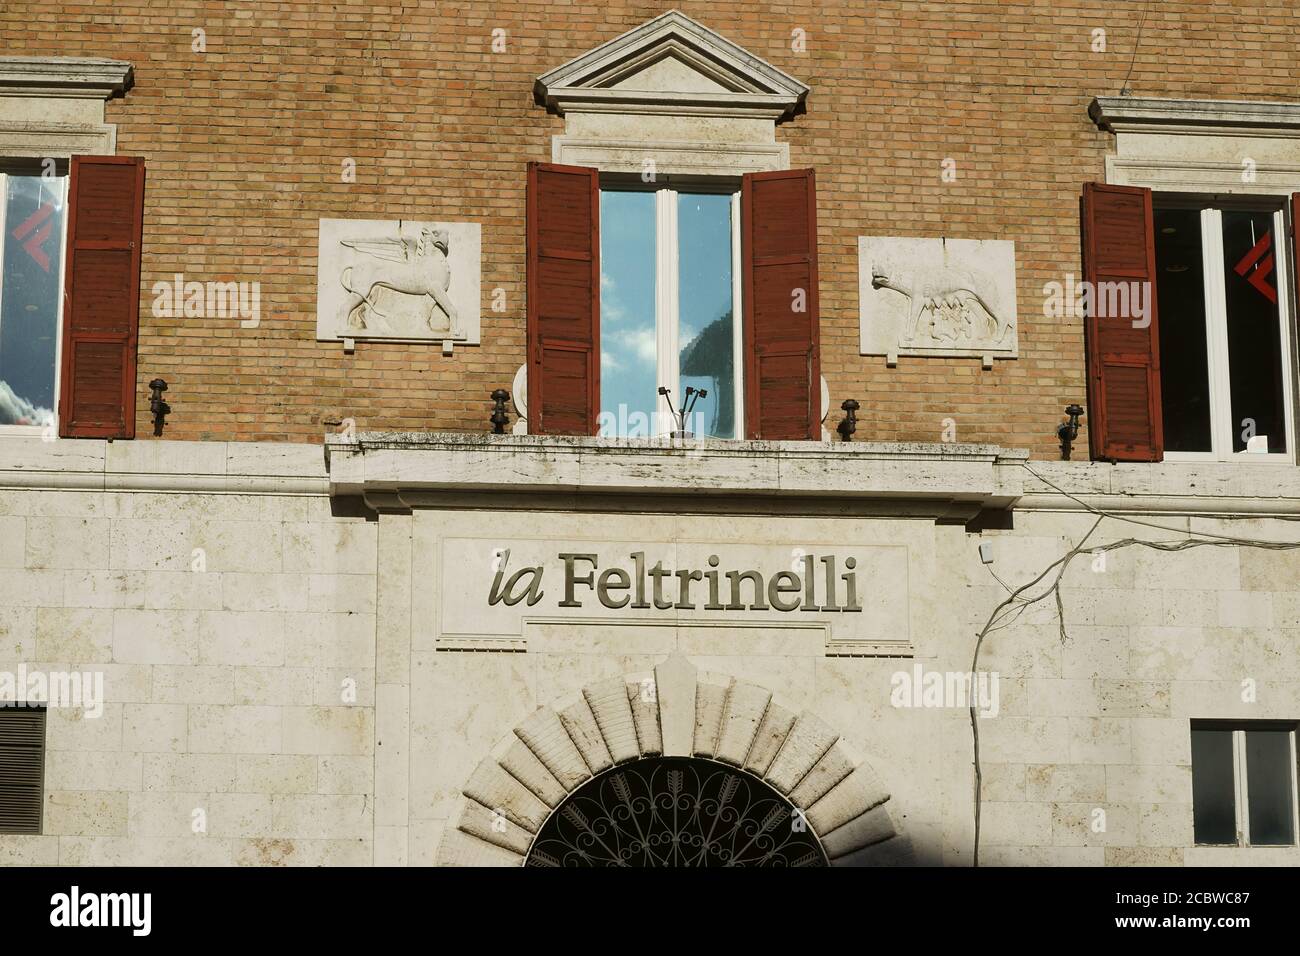 La Feltrinelli book store, store sign, Perugia, Italy Stock Photo - Alamy